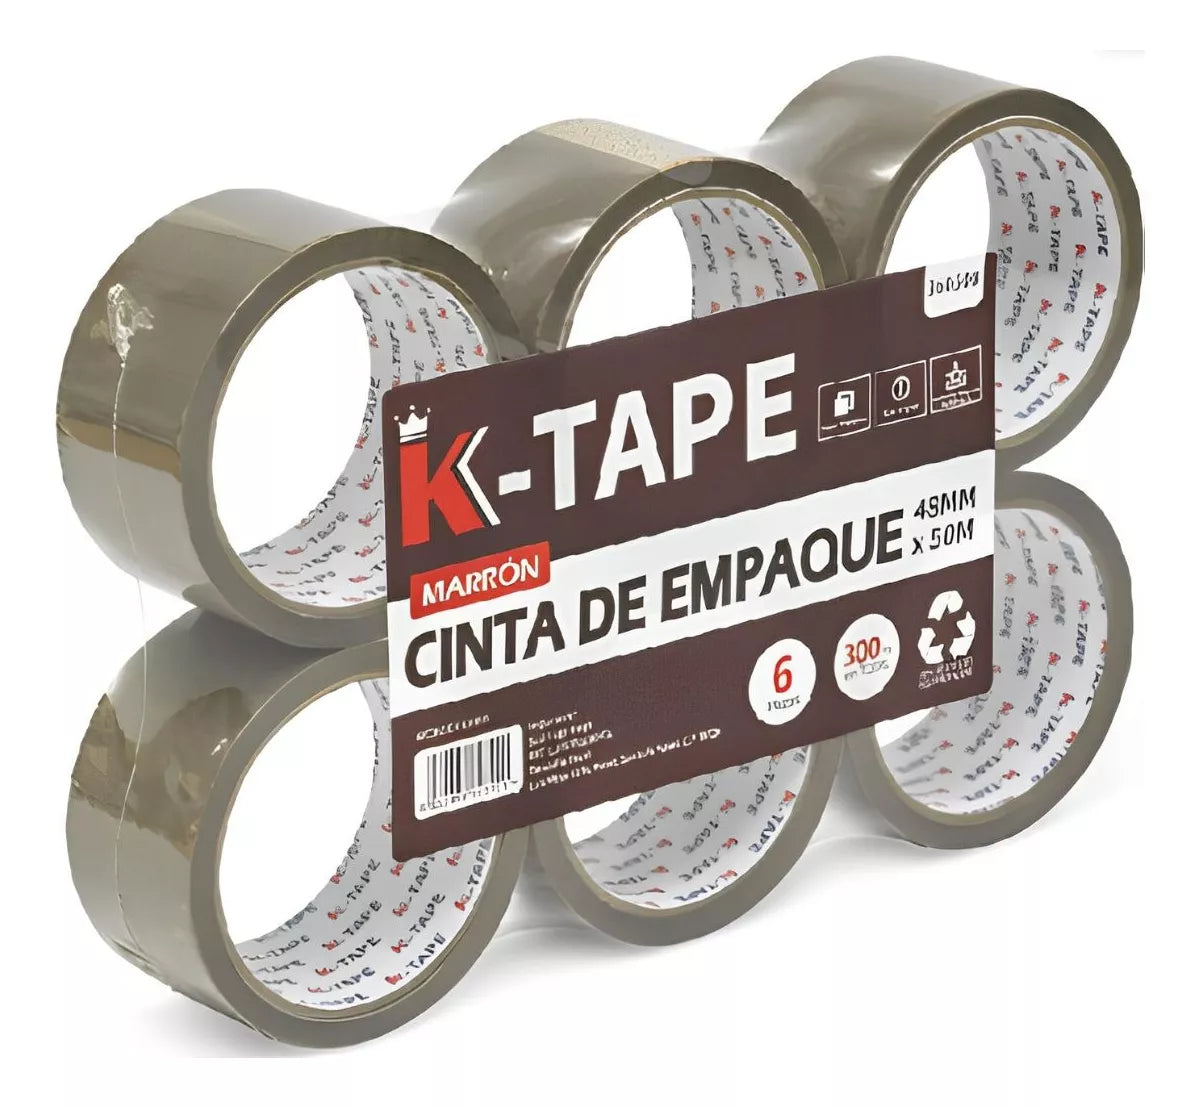 6pz Cinta Empaque Marron K-tape Canela 48mmx150m